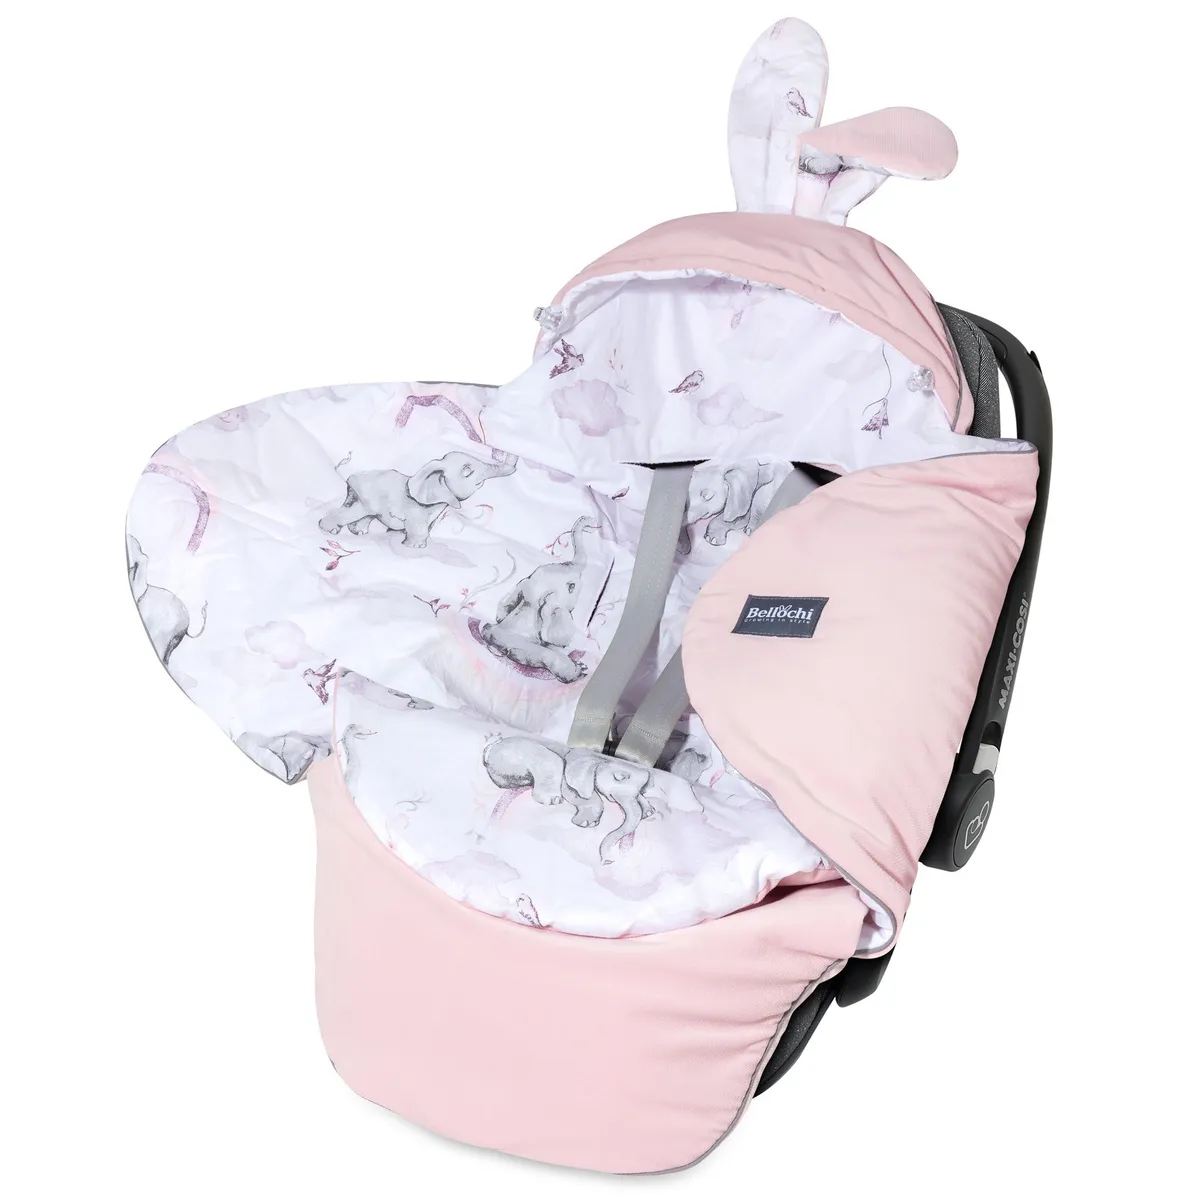 Baby car seat blanket 90×90 cm Habarigani